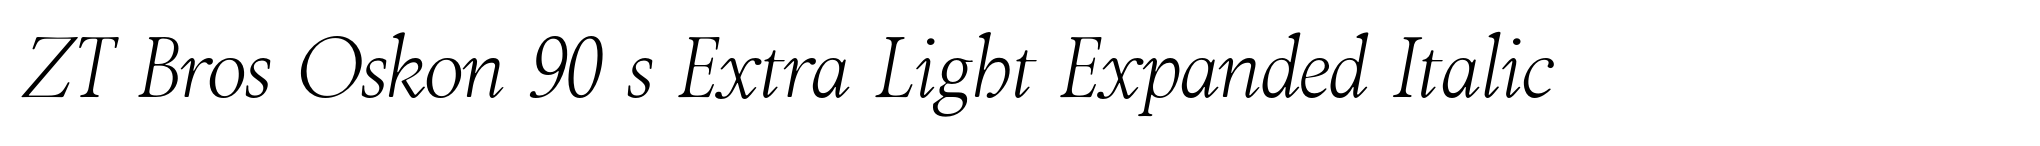 ZT Bros Oskon 90 s Extra Light Expanded Italic image